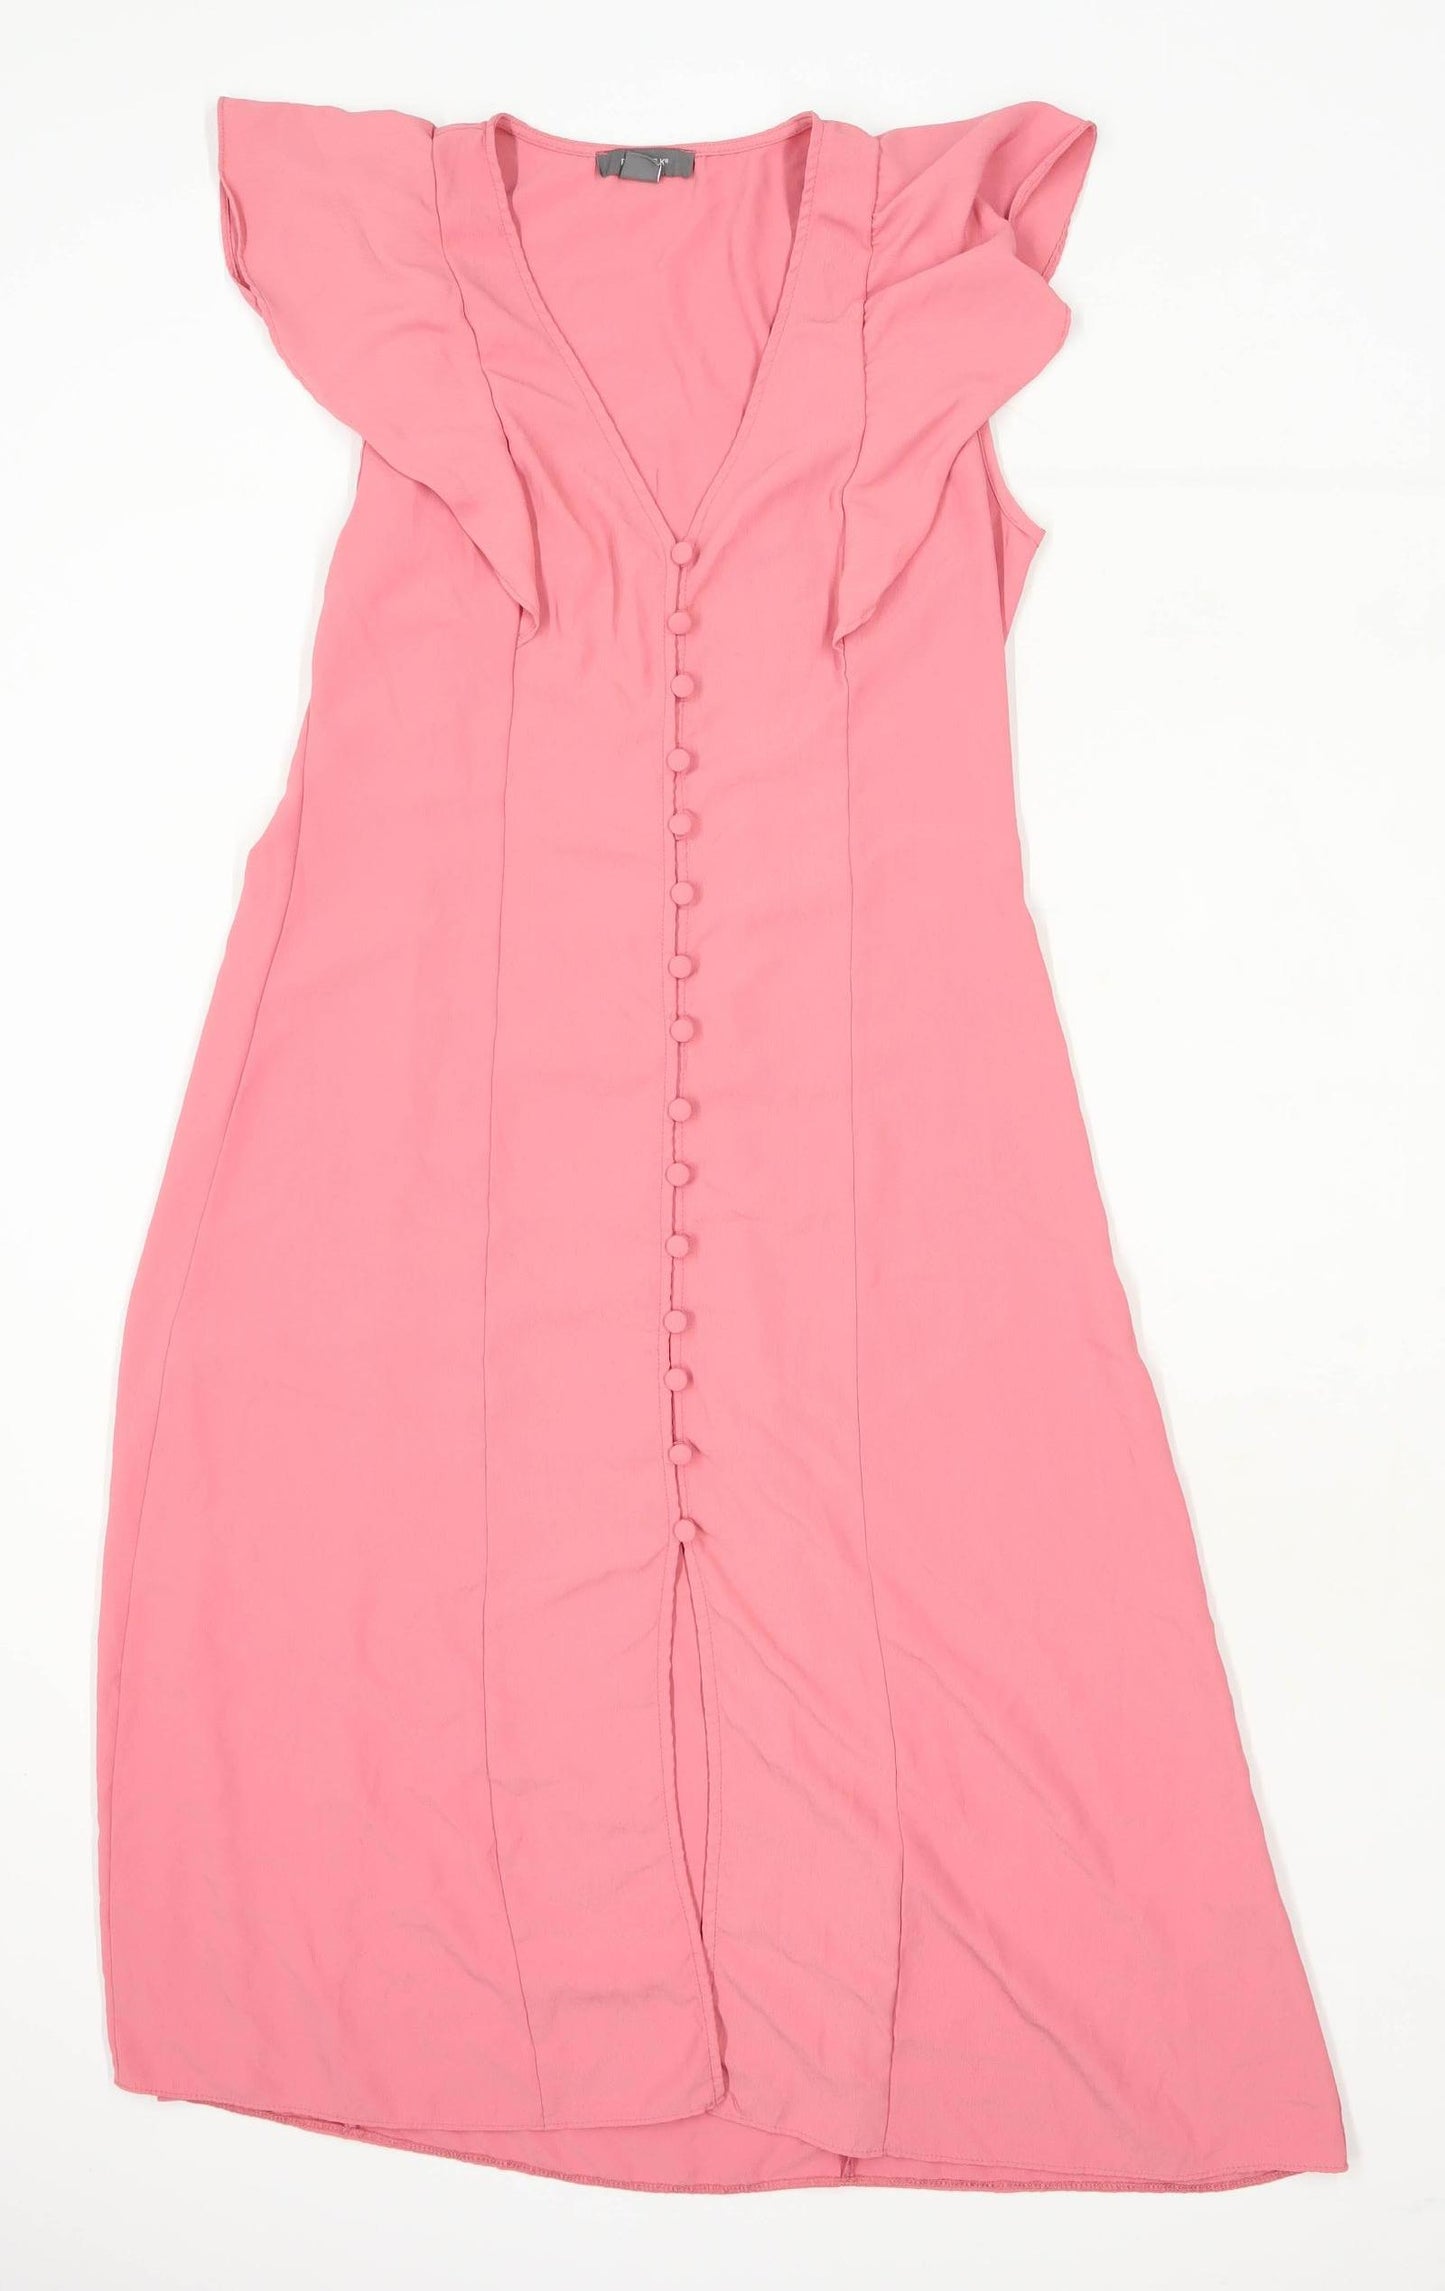 Primark Womens Size 10 Pink Shirt Dress (Regular)